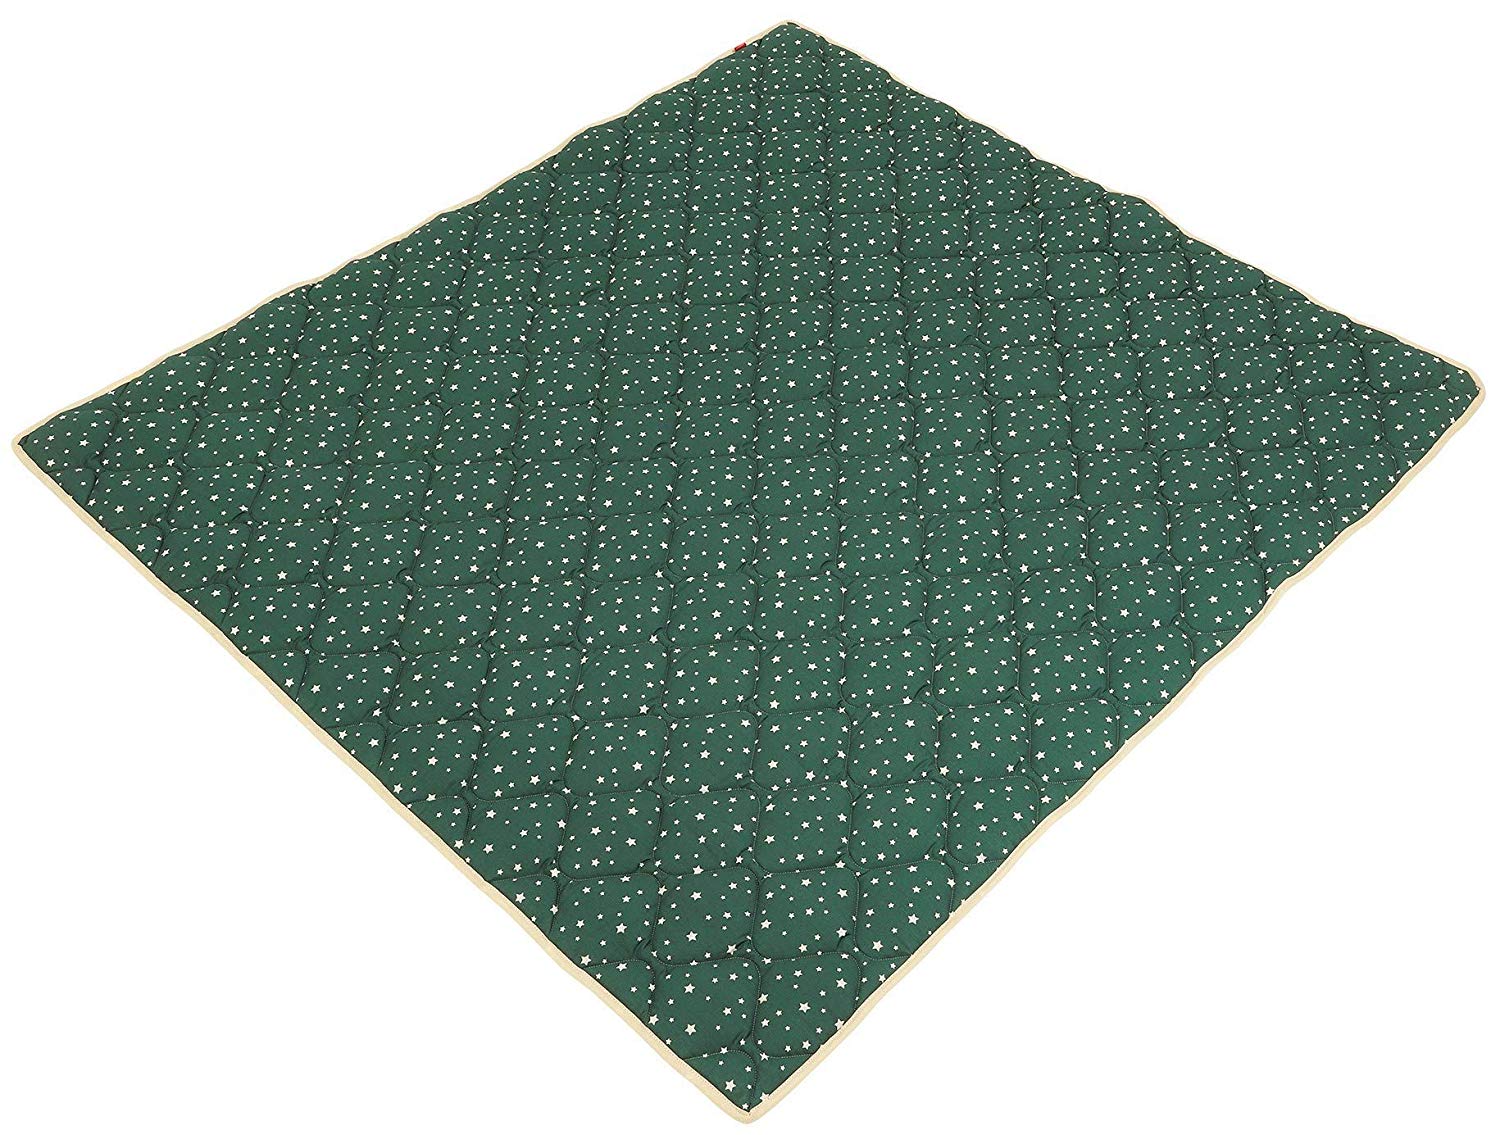 Ideenreich Ideenreich 2542 Baby Crawling Blanket with Stars Green 130 x 150 cm Ideal as Play Mat and Playpen Mat Green